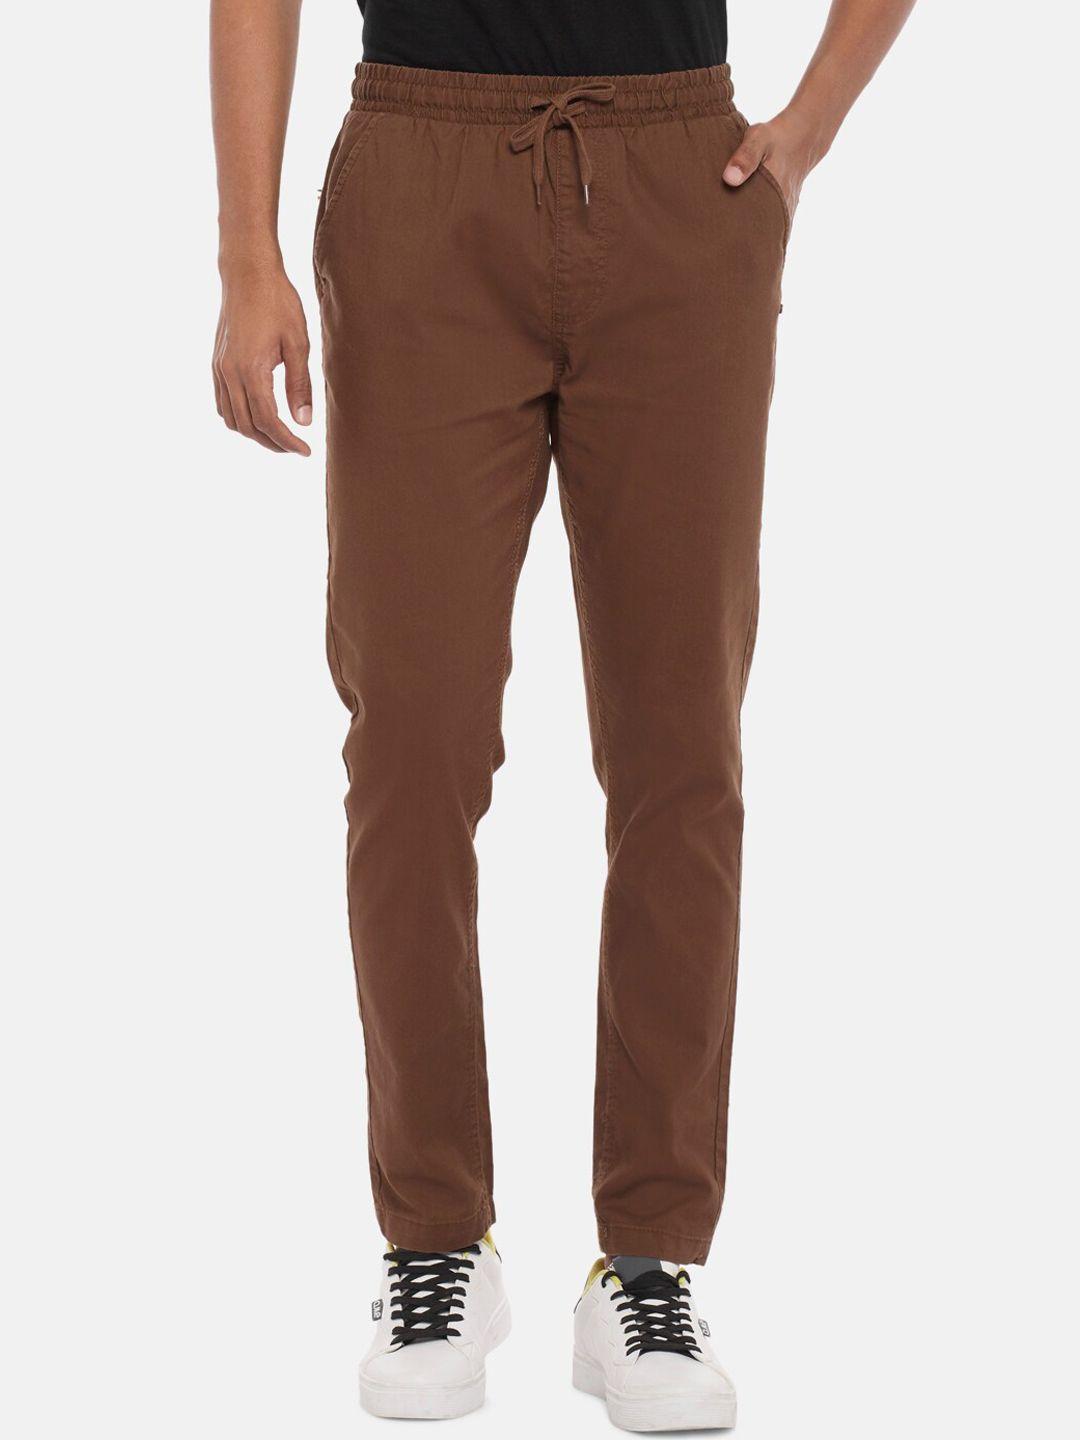 urban ranger by pantaloons men brown slim fit trousers